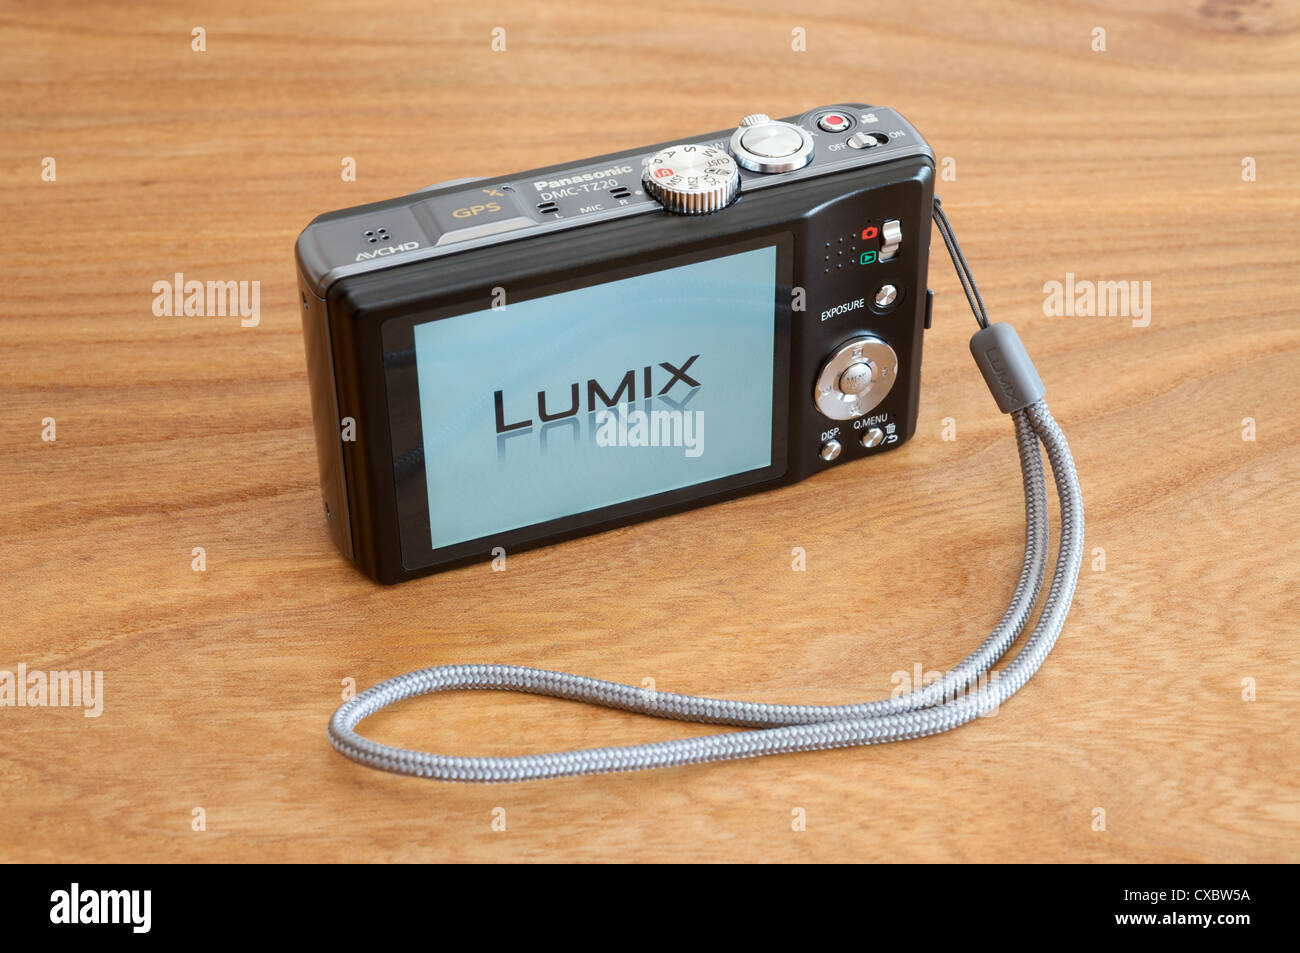 Panasonic Lumix TZ20 digital camera Stock Photo - Alamy